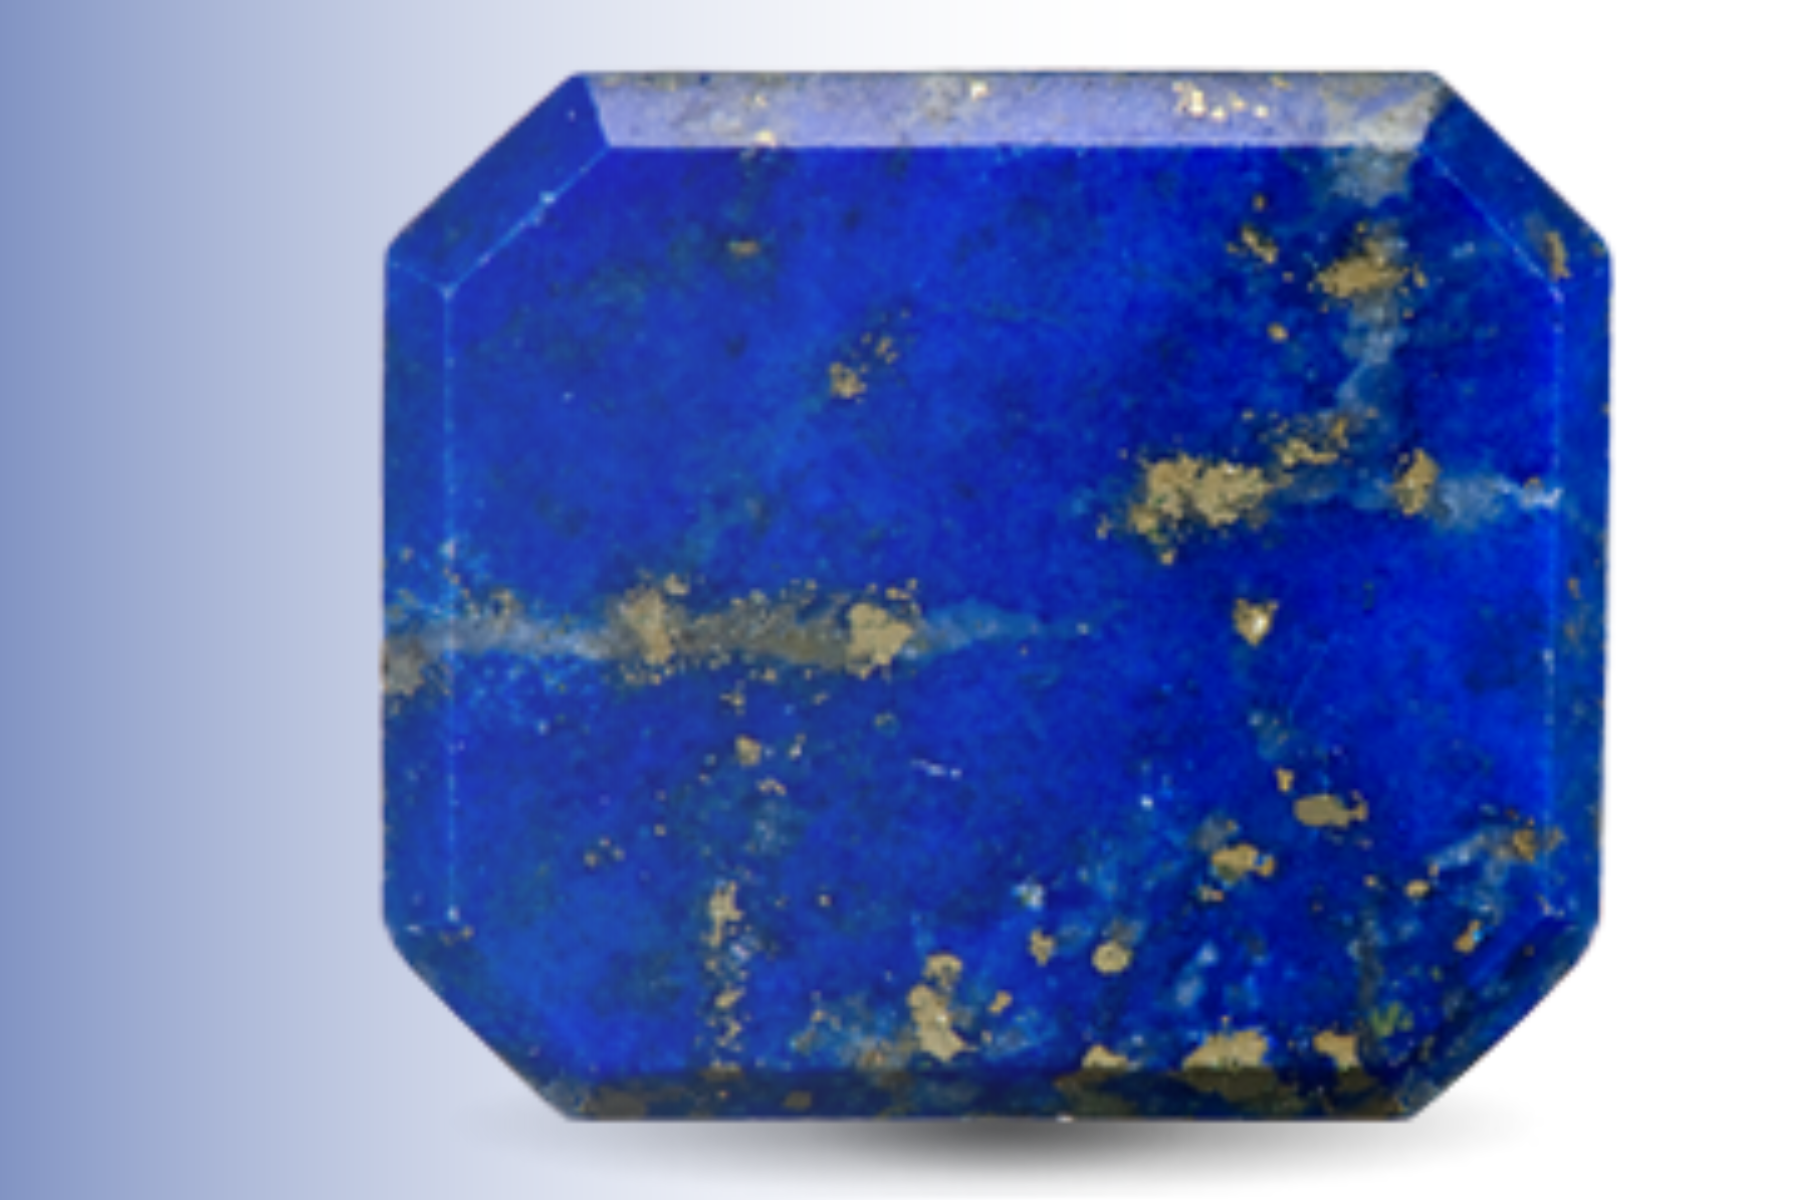 Octagonal deep blue Lapis Lazuli stone